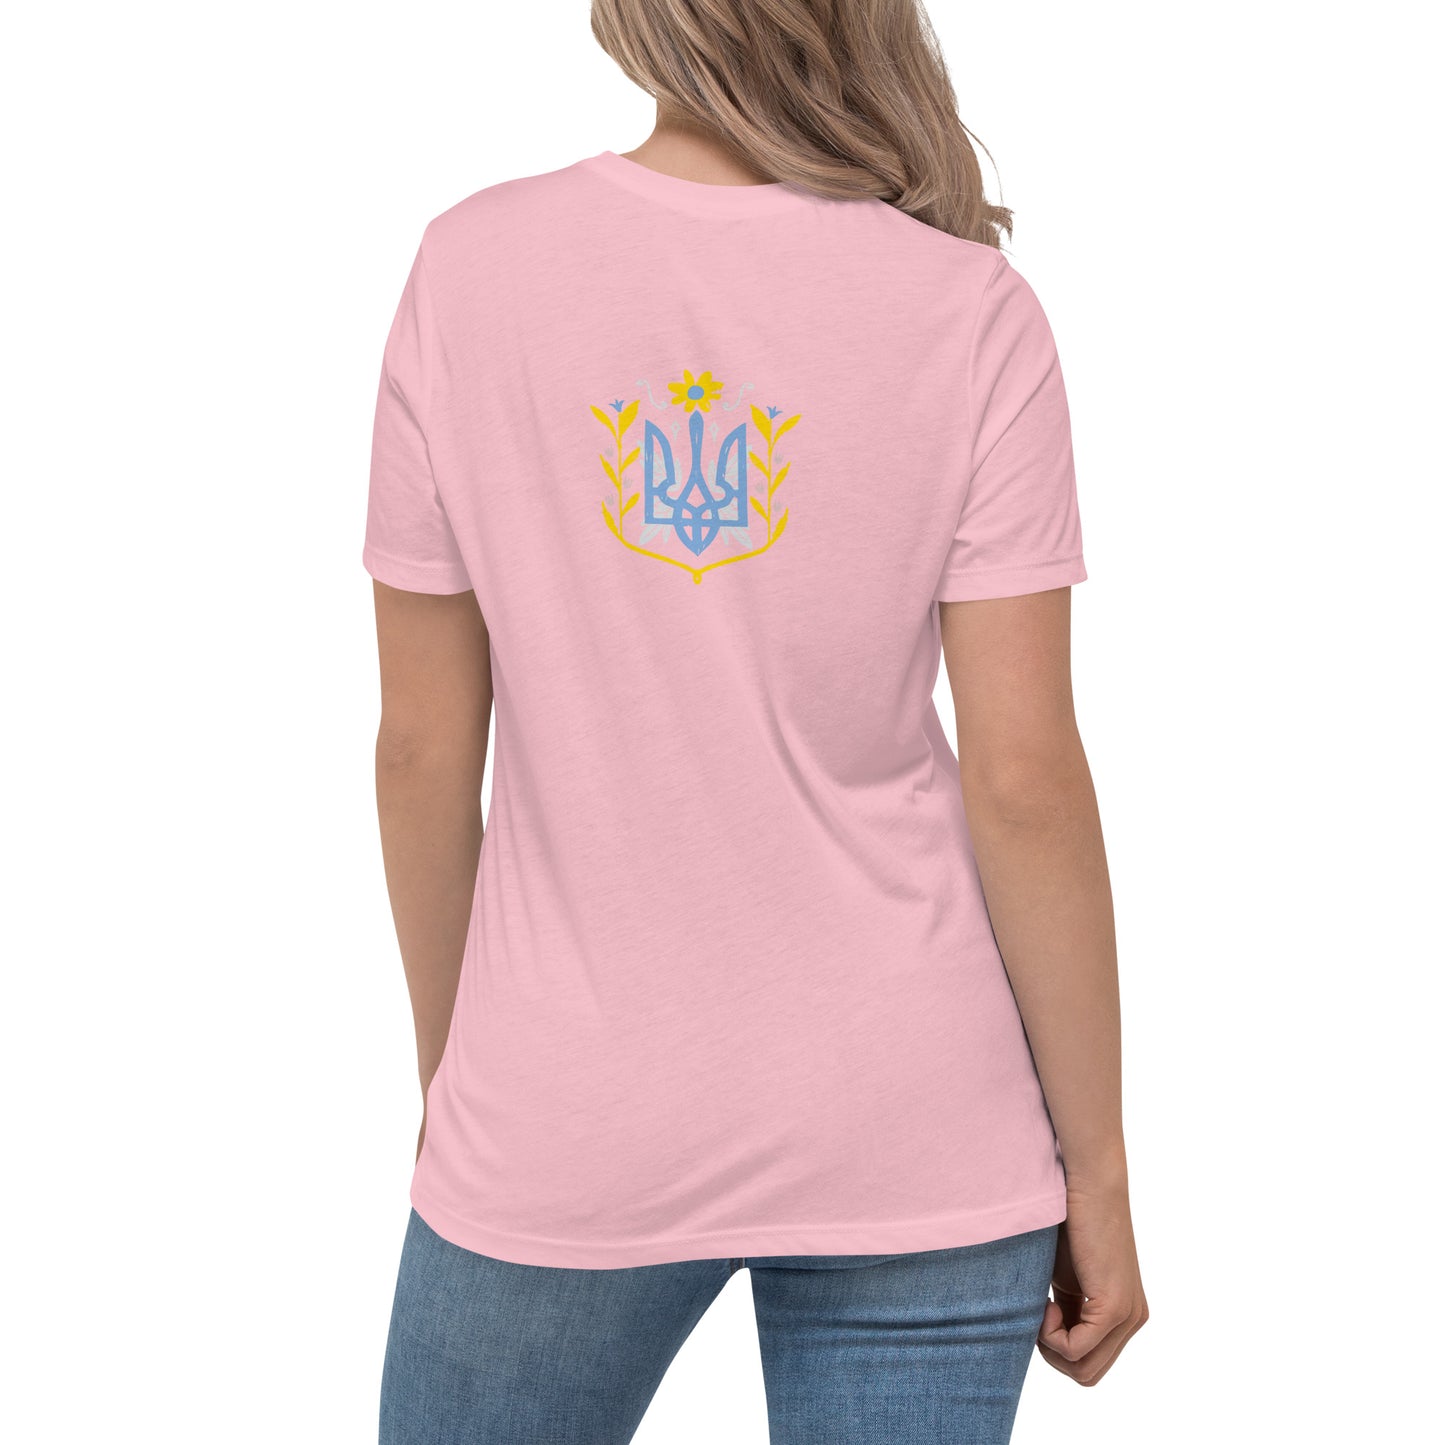 Women's Relaxed T-Shirt | Ukraine